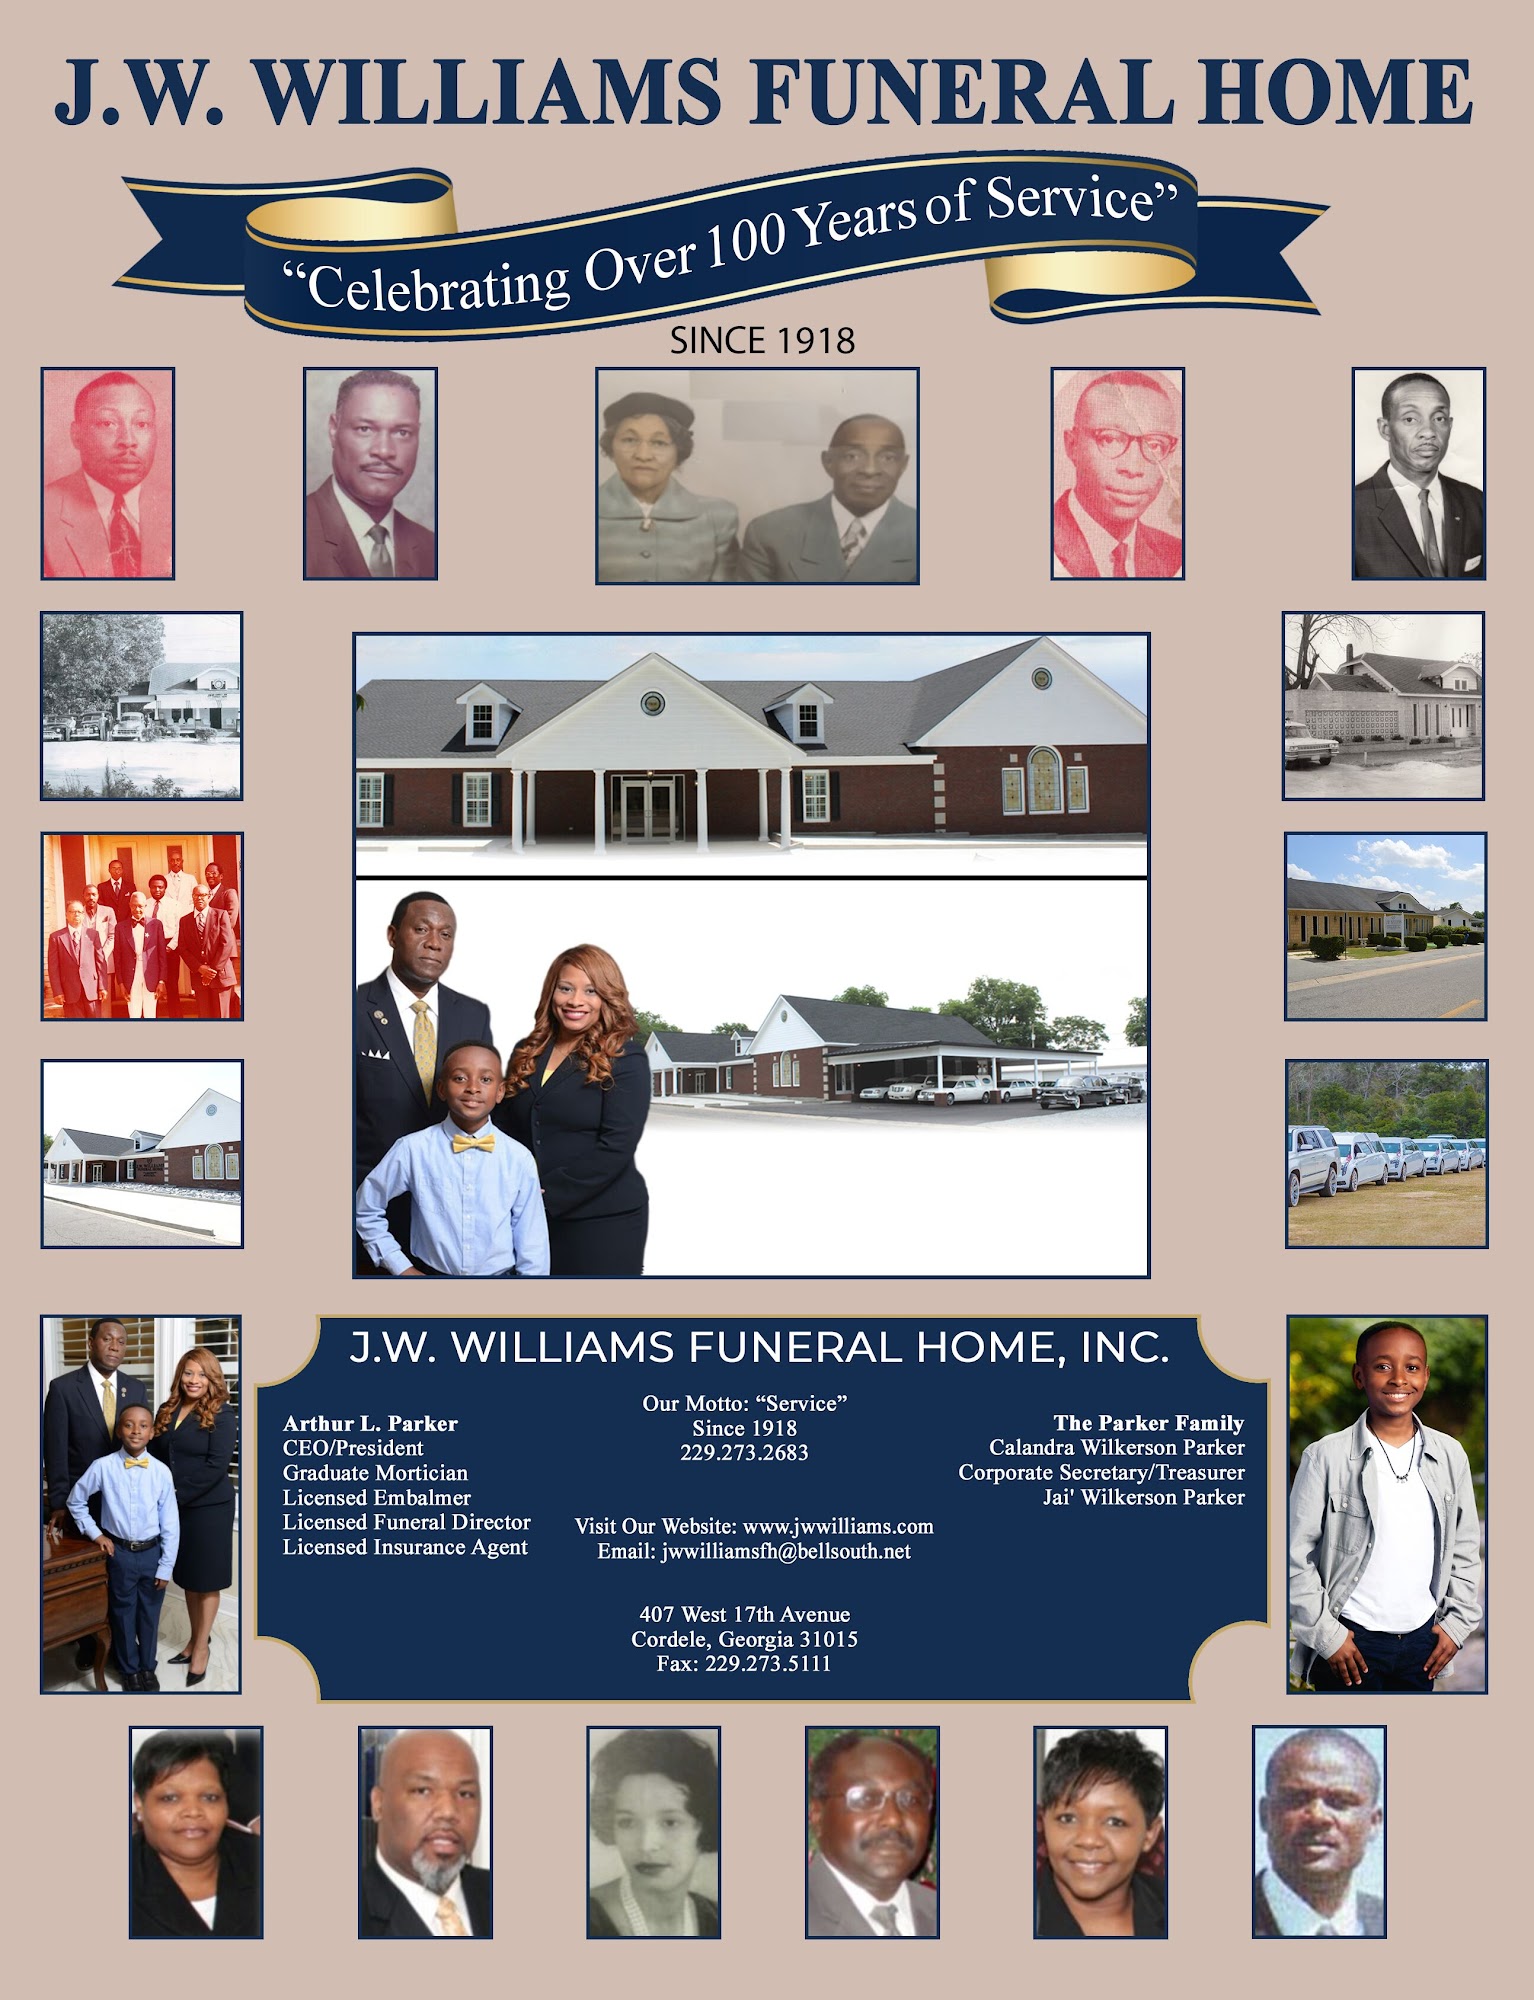 J W Williams Funeral Home: Parker Arthur L 407 17th Ave W, Cordele Georgia 31015